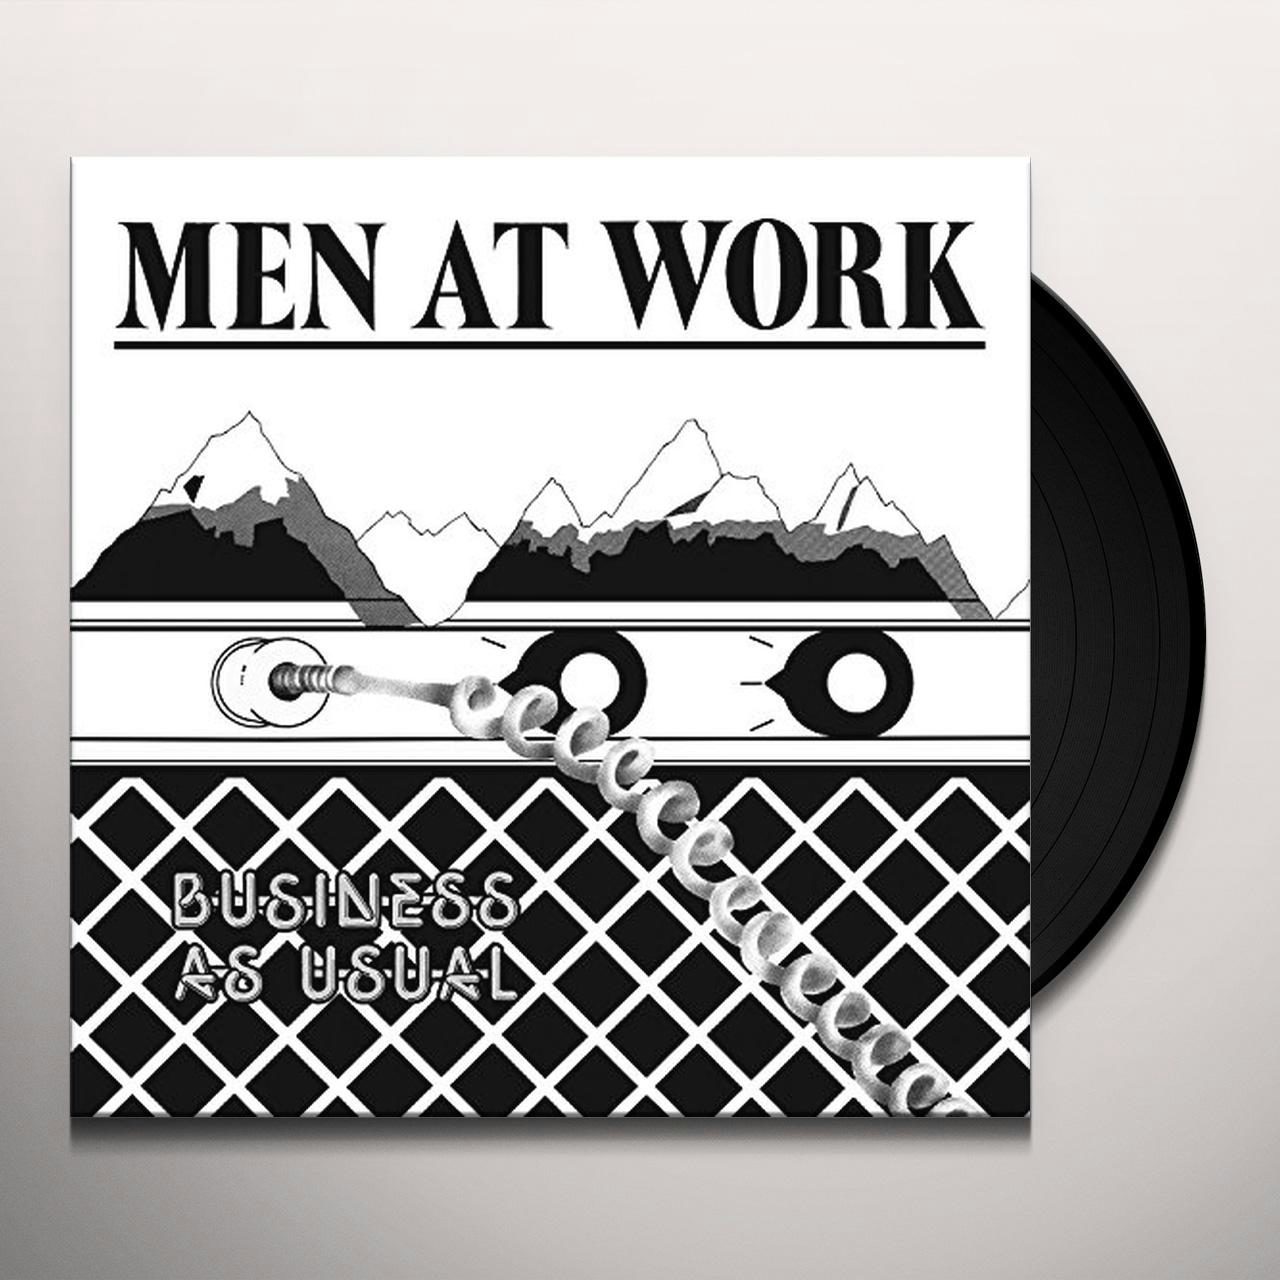 men at work business as usual vinyl